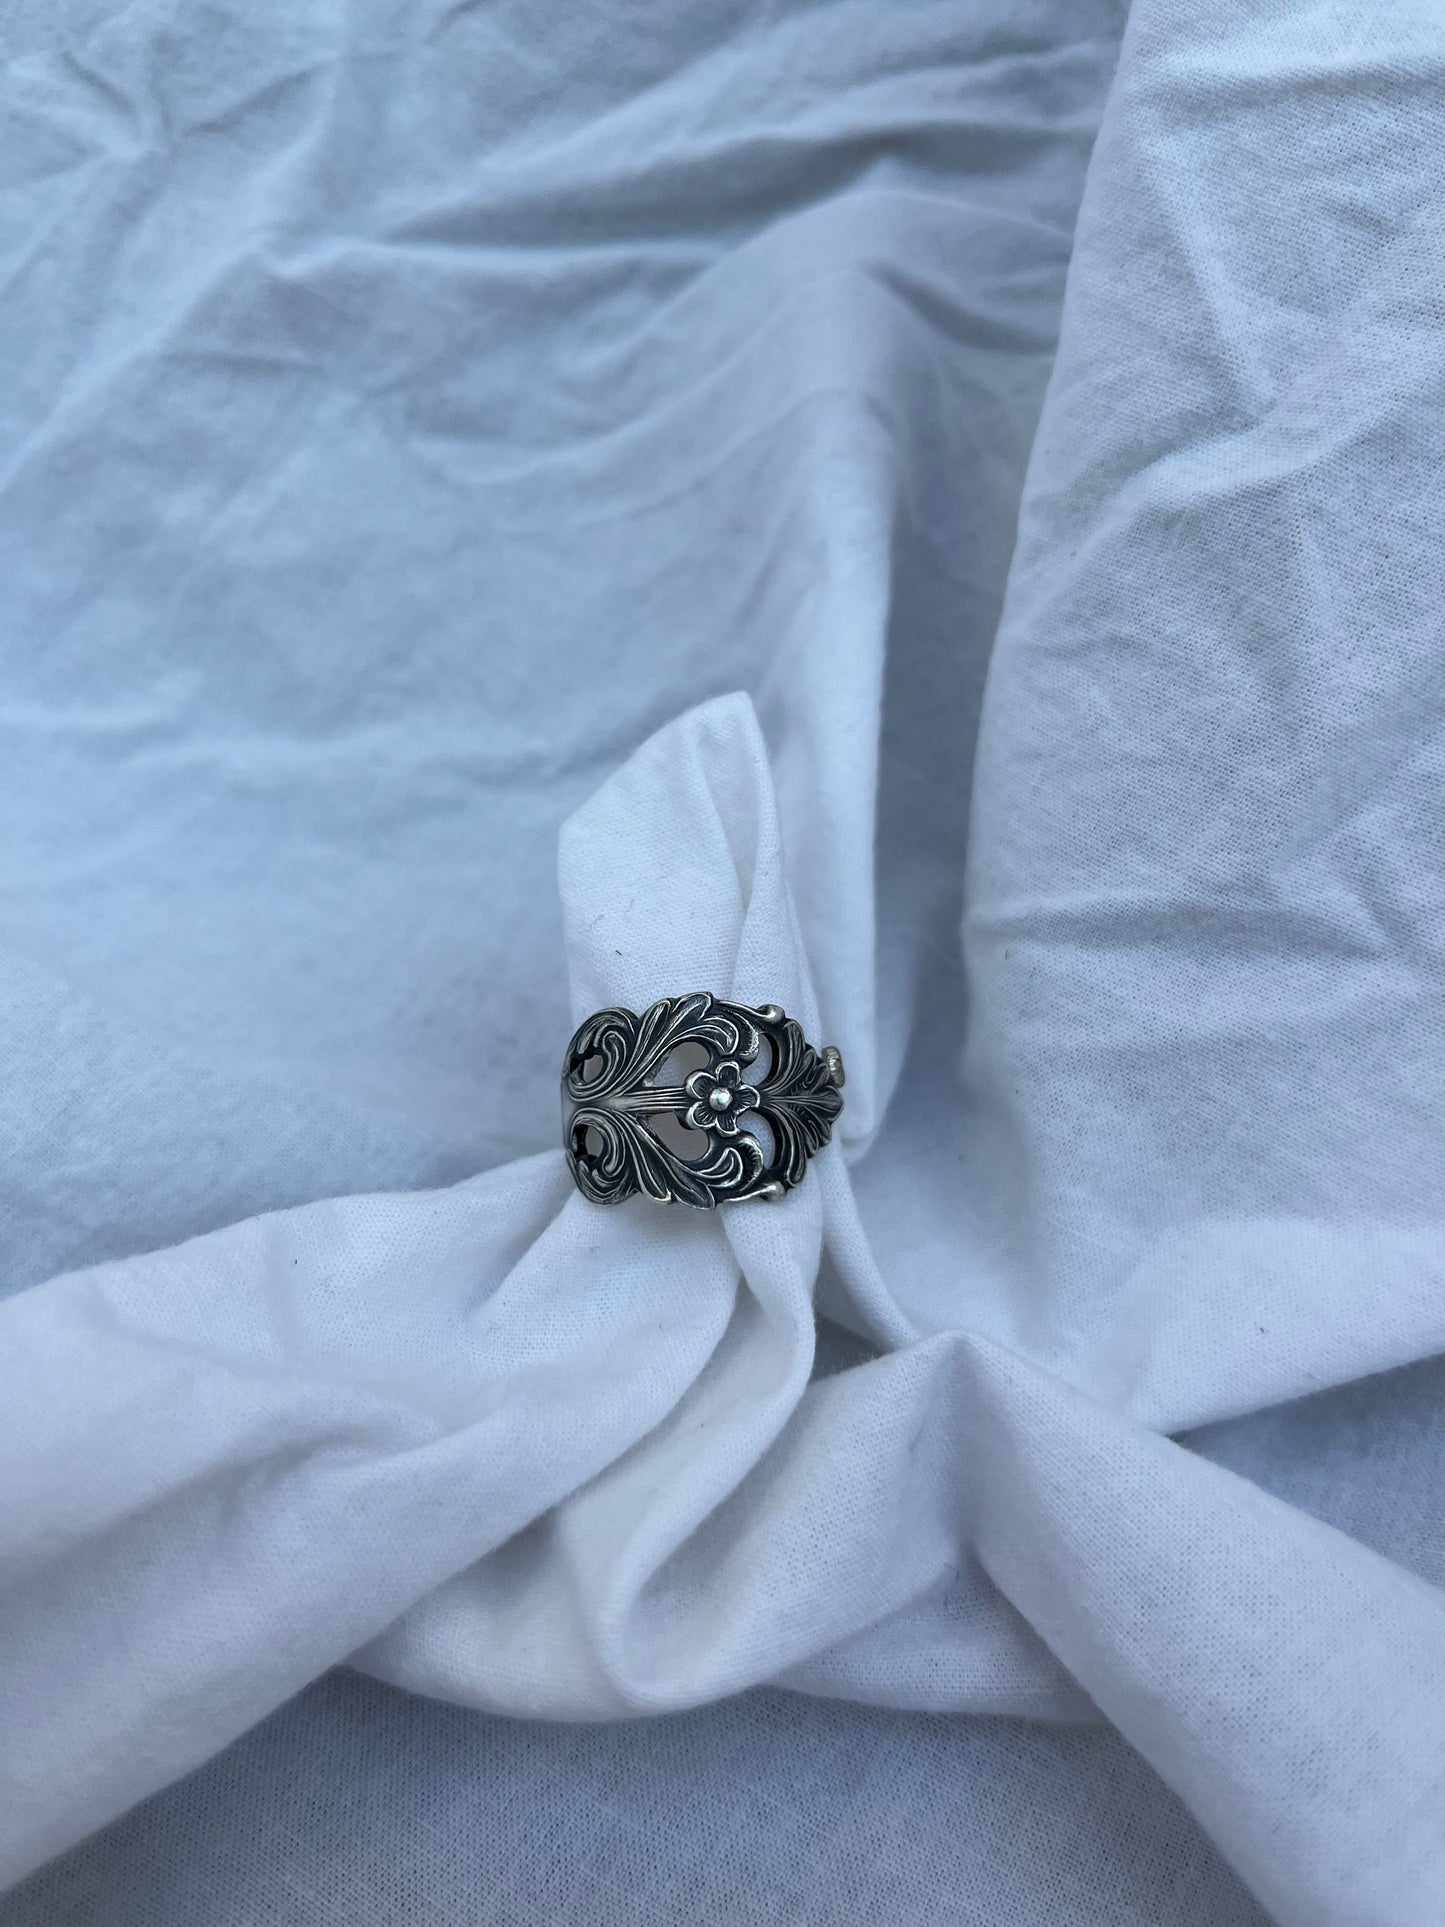 Romantic Silver ring